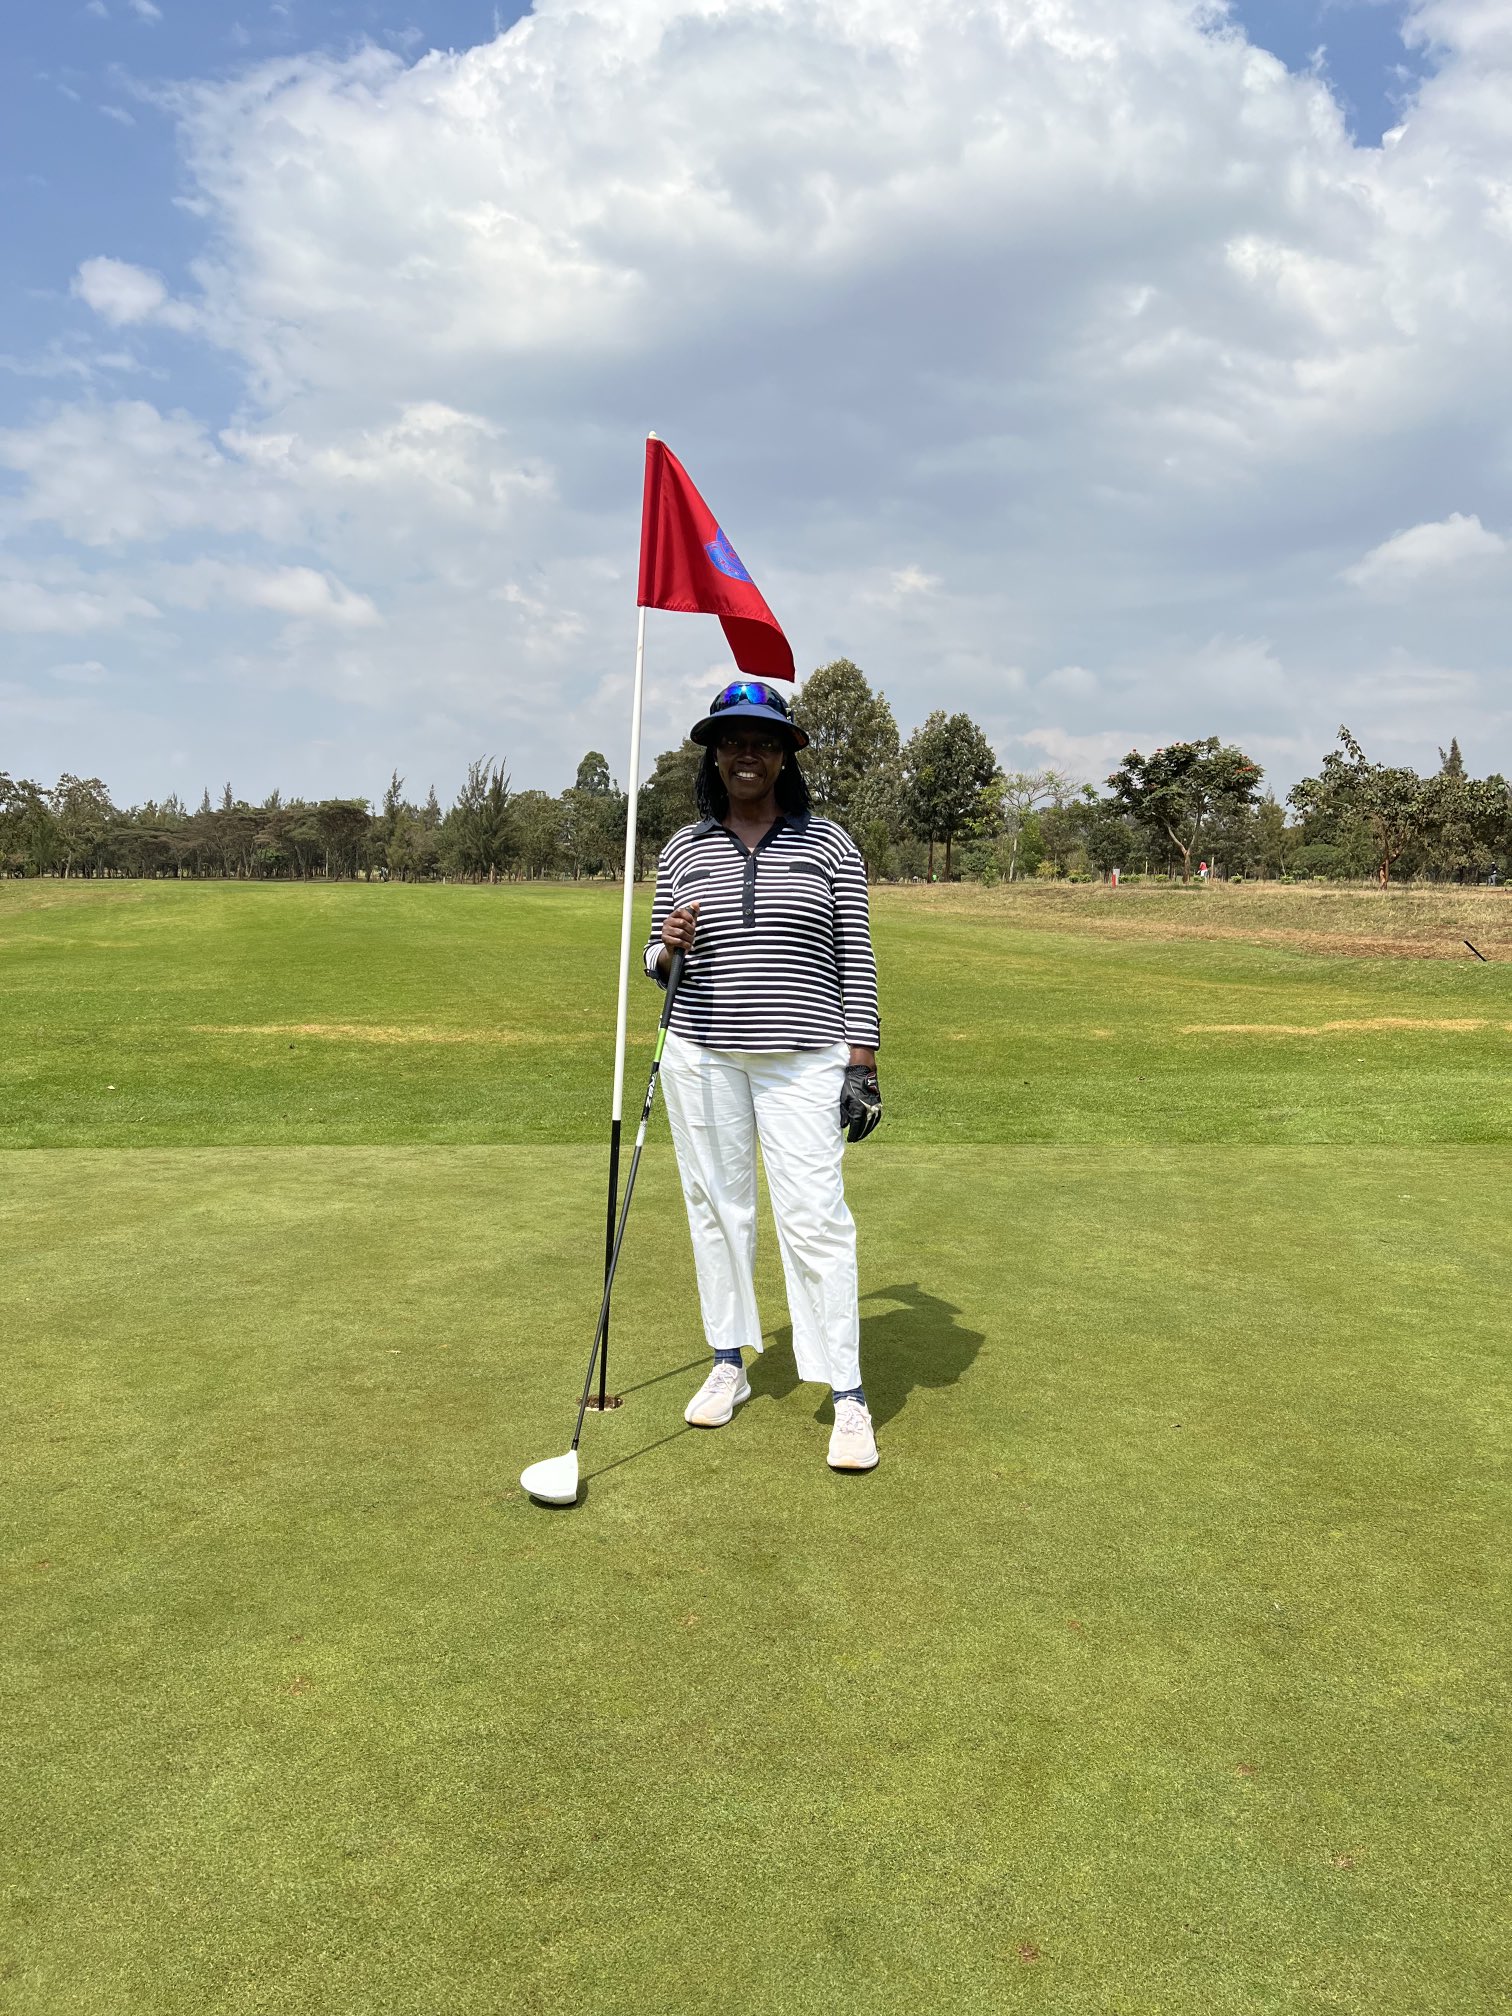 Martha Karua goes golfing as President Ruto is sworn in